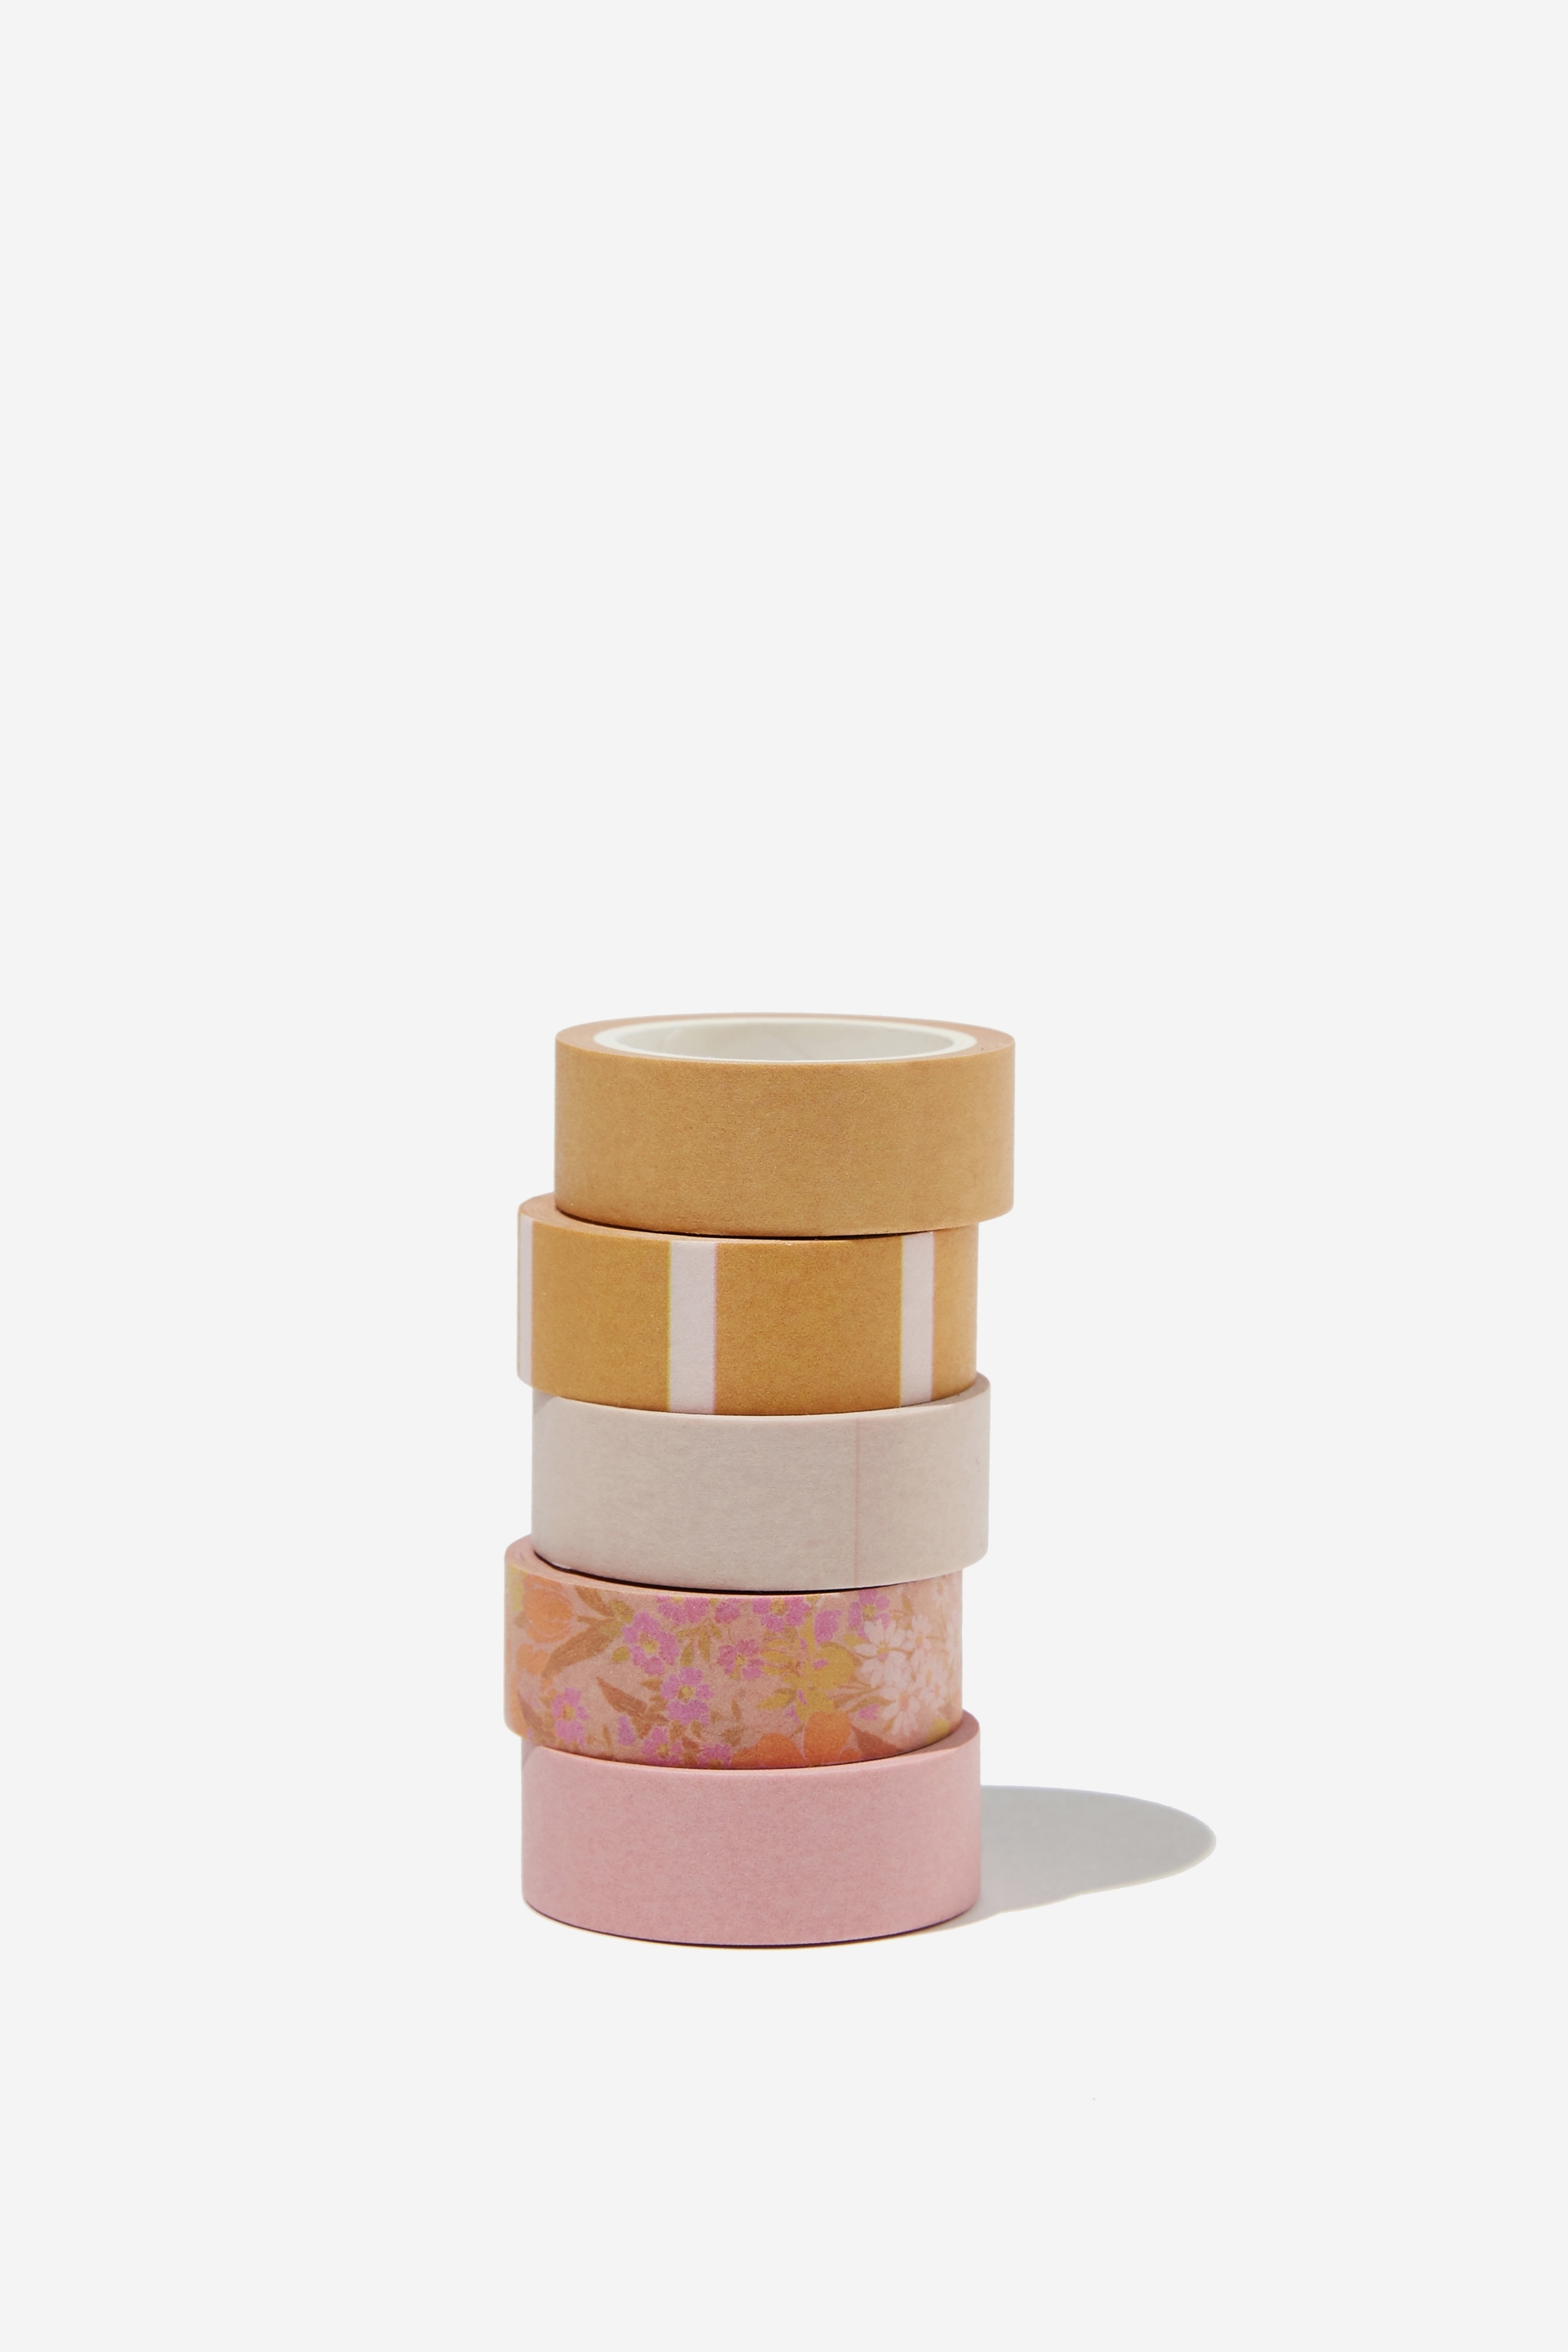 Typo - Washi Tape 5Pk - Sand goldie floral